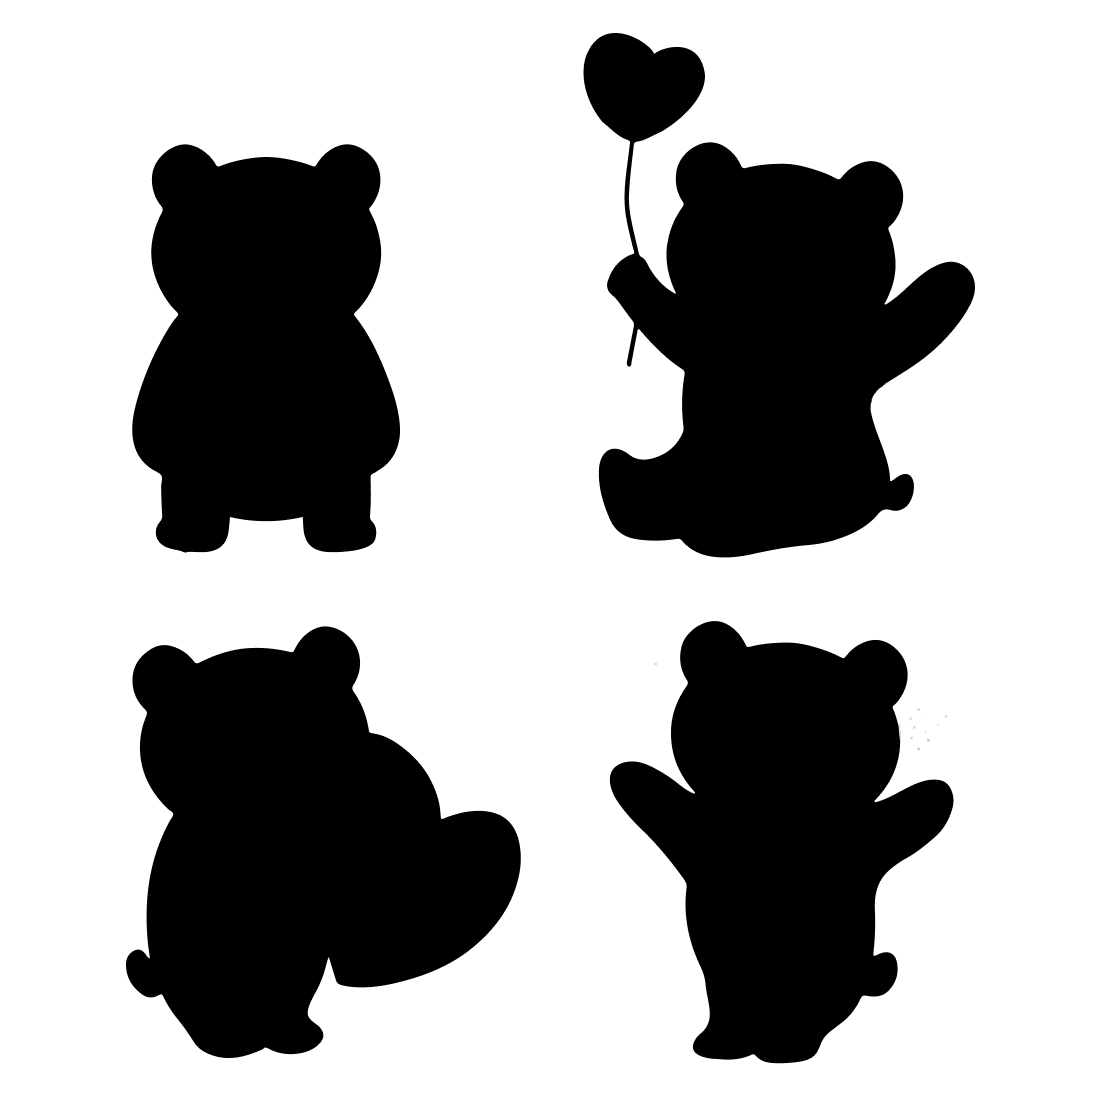 Teddy Bear SVG Designs Bundle – MasterBundles